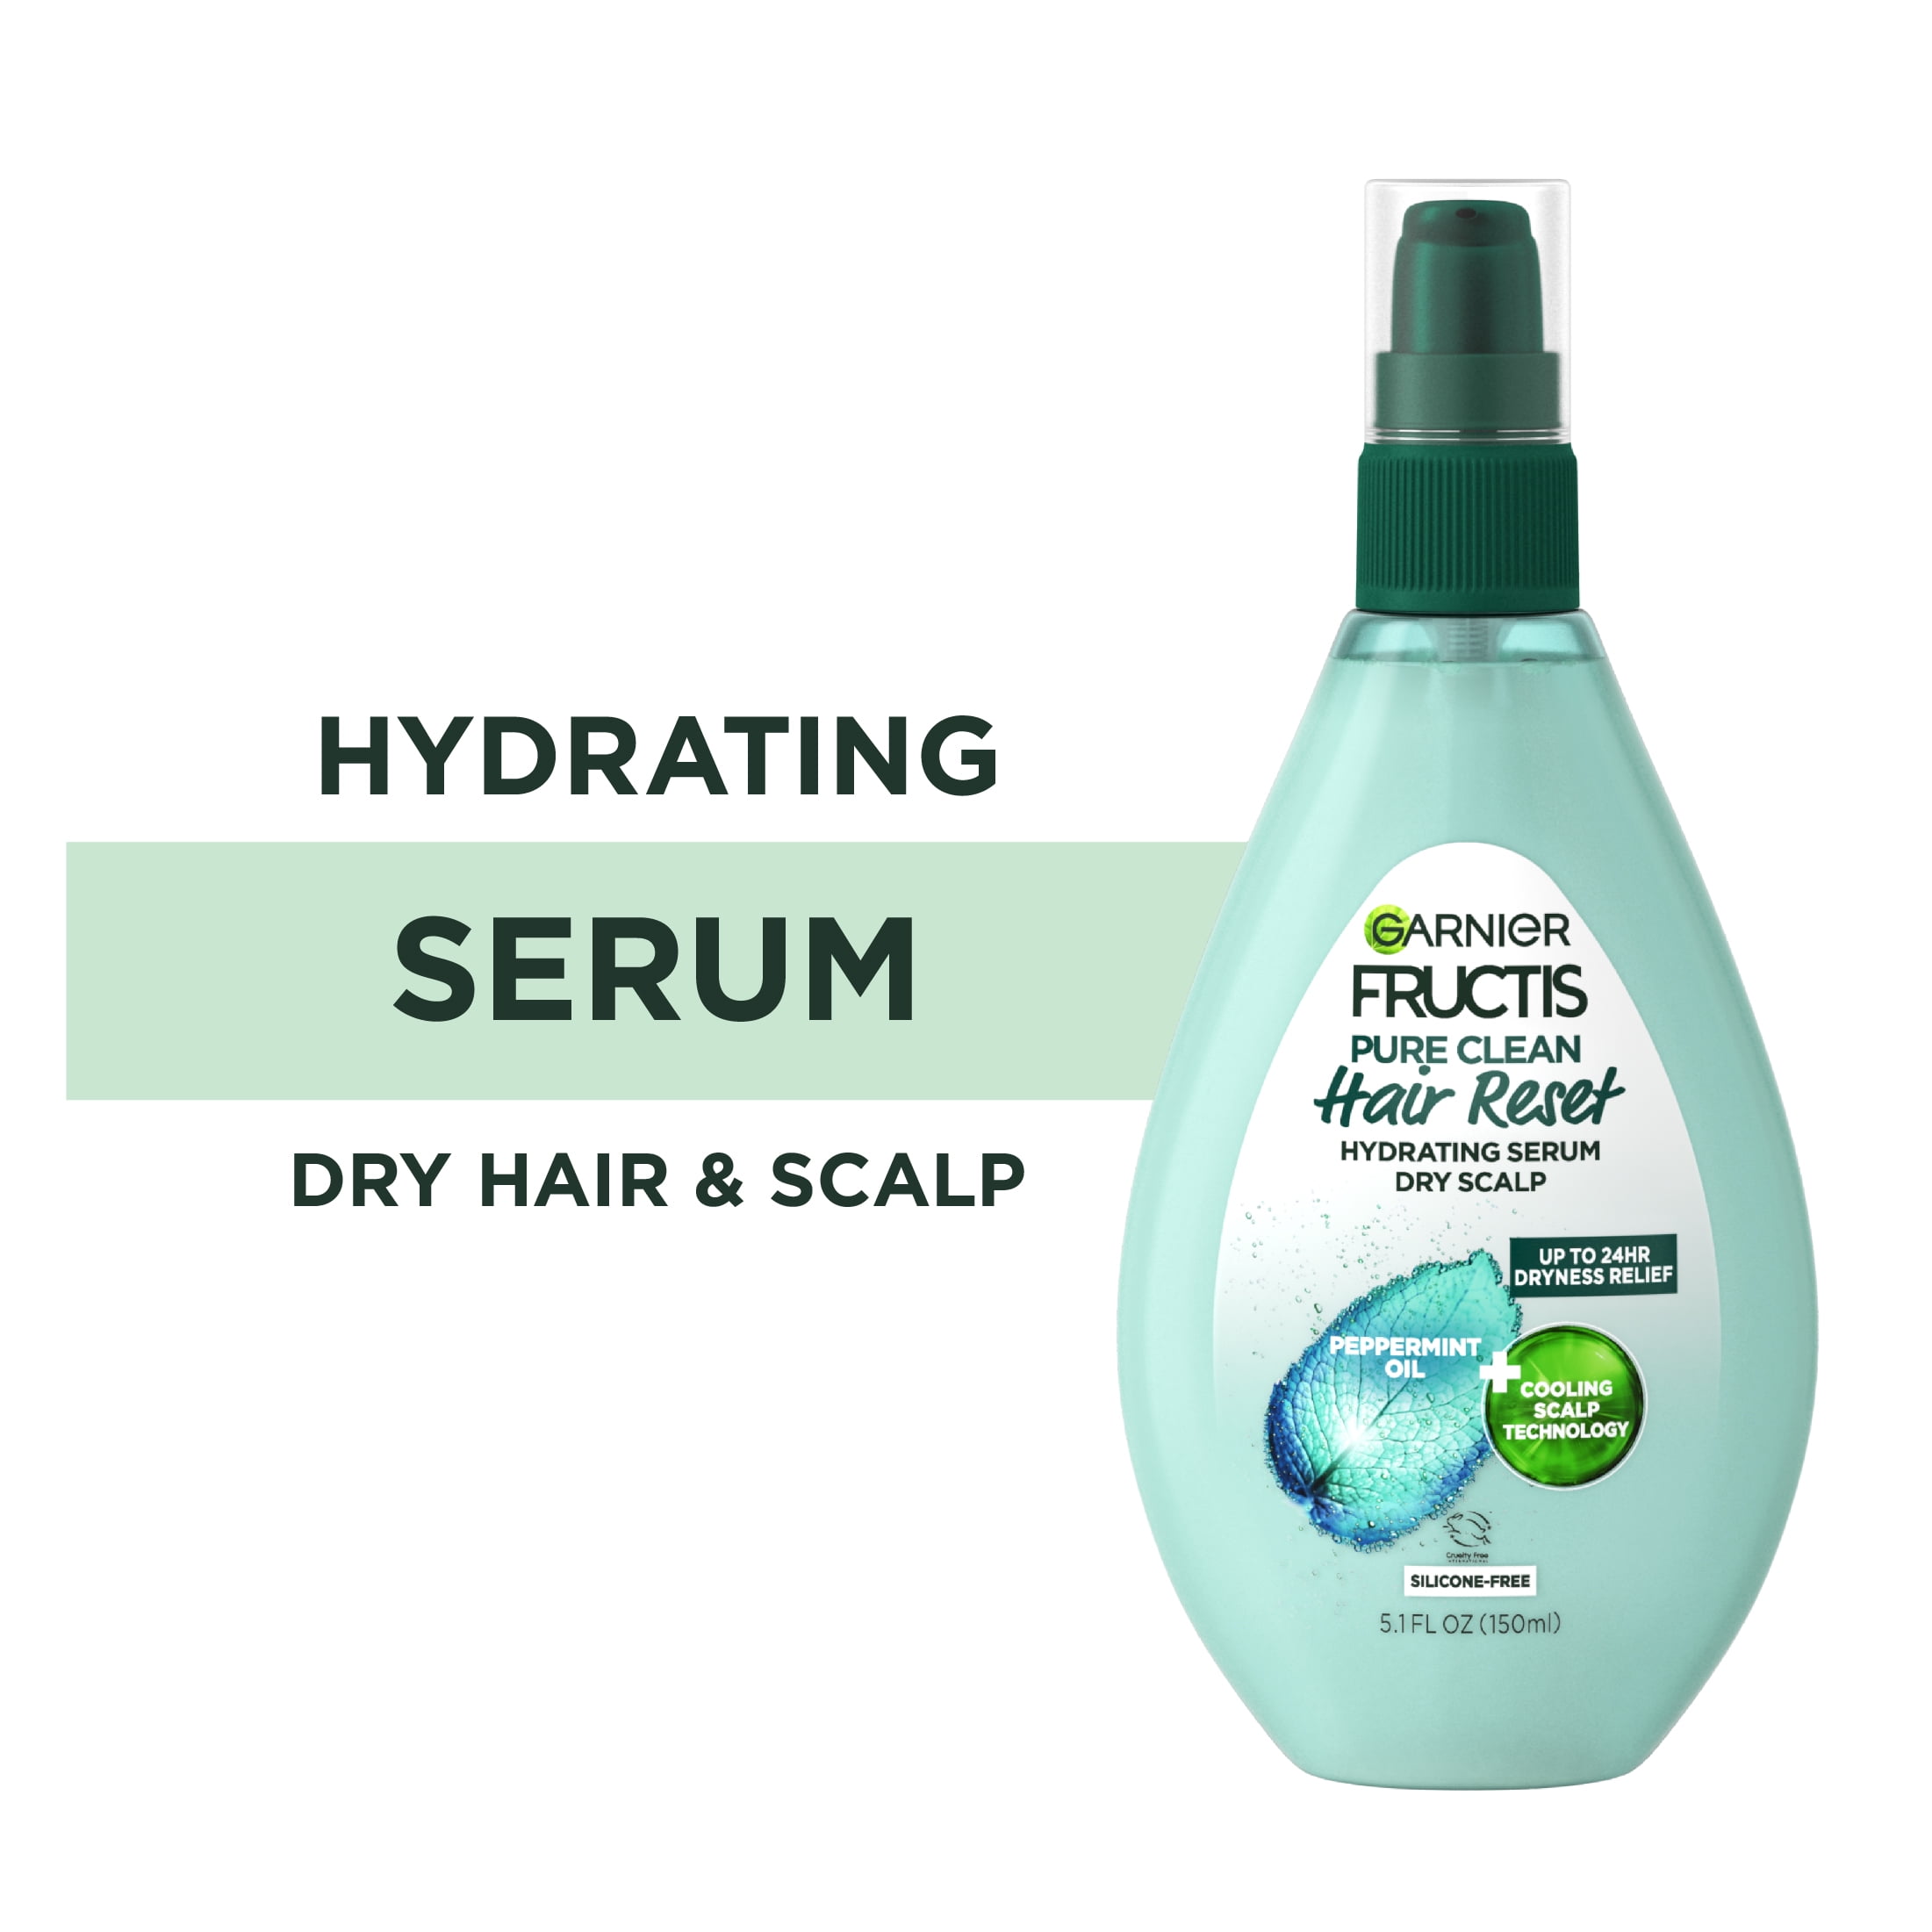 Garnier Fructis Pure Clean Hair Reset Anti-Dryness Serum, Dry Scalp, 5.07 fl oz